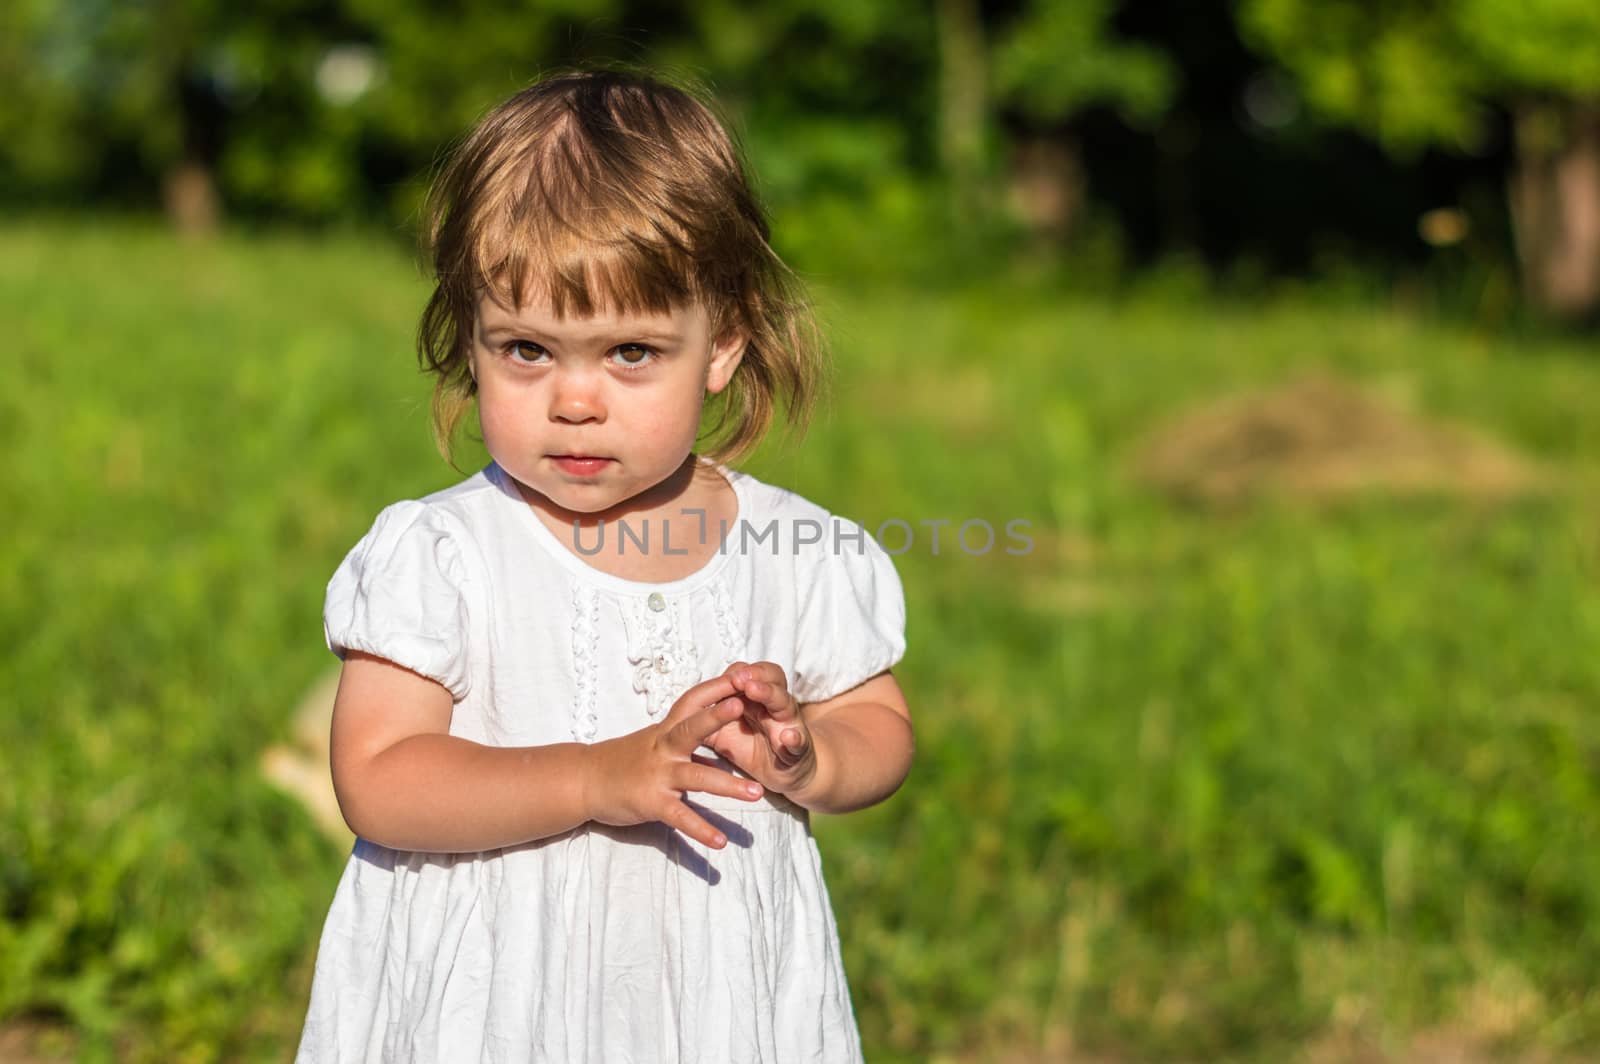 a little girl walks in the Park in summer